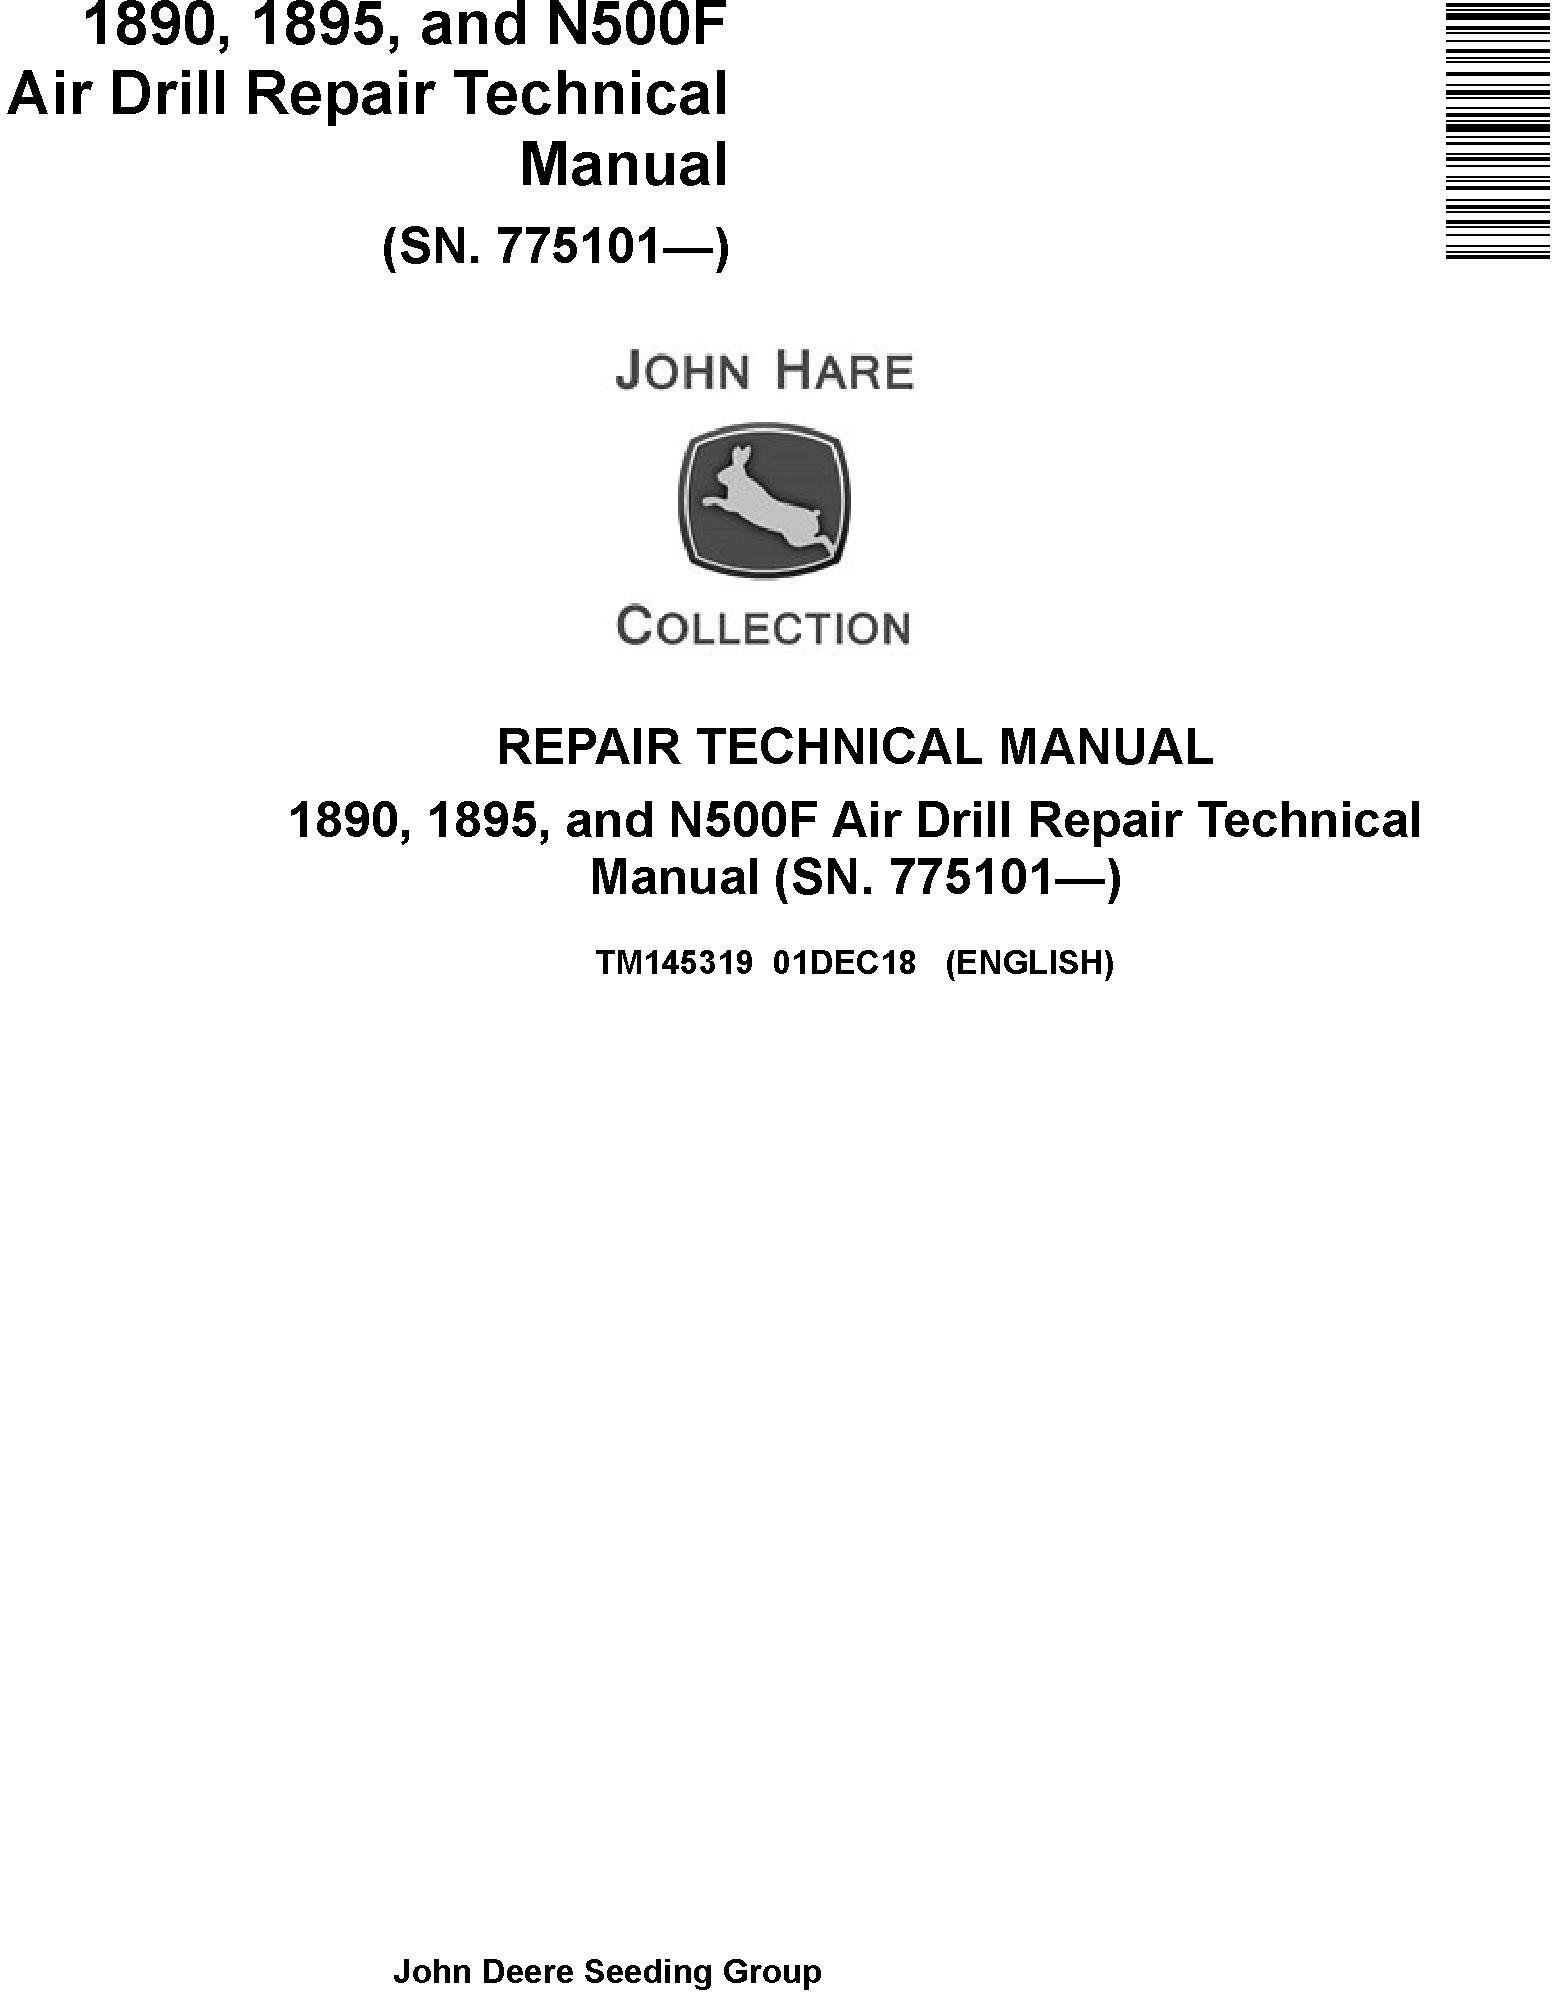 John Deere 1890 1895 N500F Air Drill Repair Technical Manual TM145319